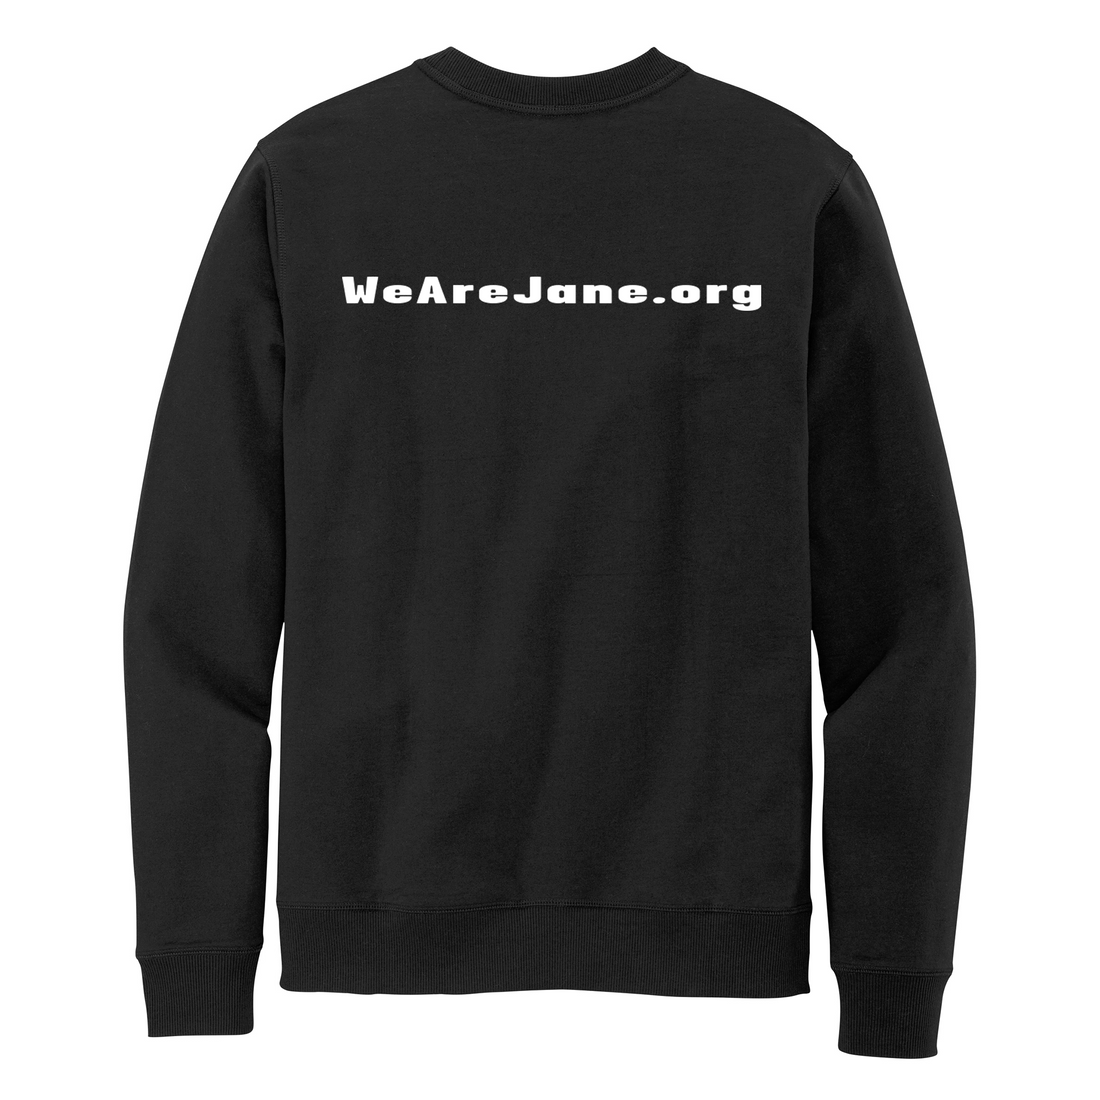 Unisex JANE Crewneck Sweatshirt in Black with White Letters